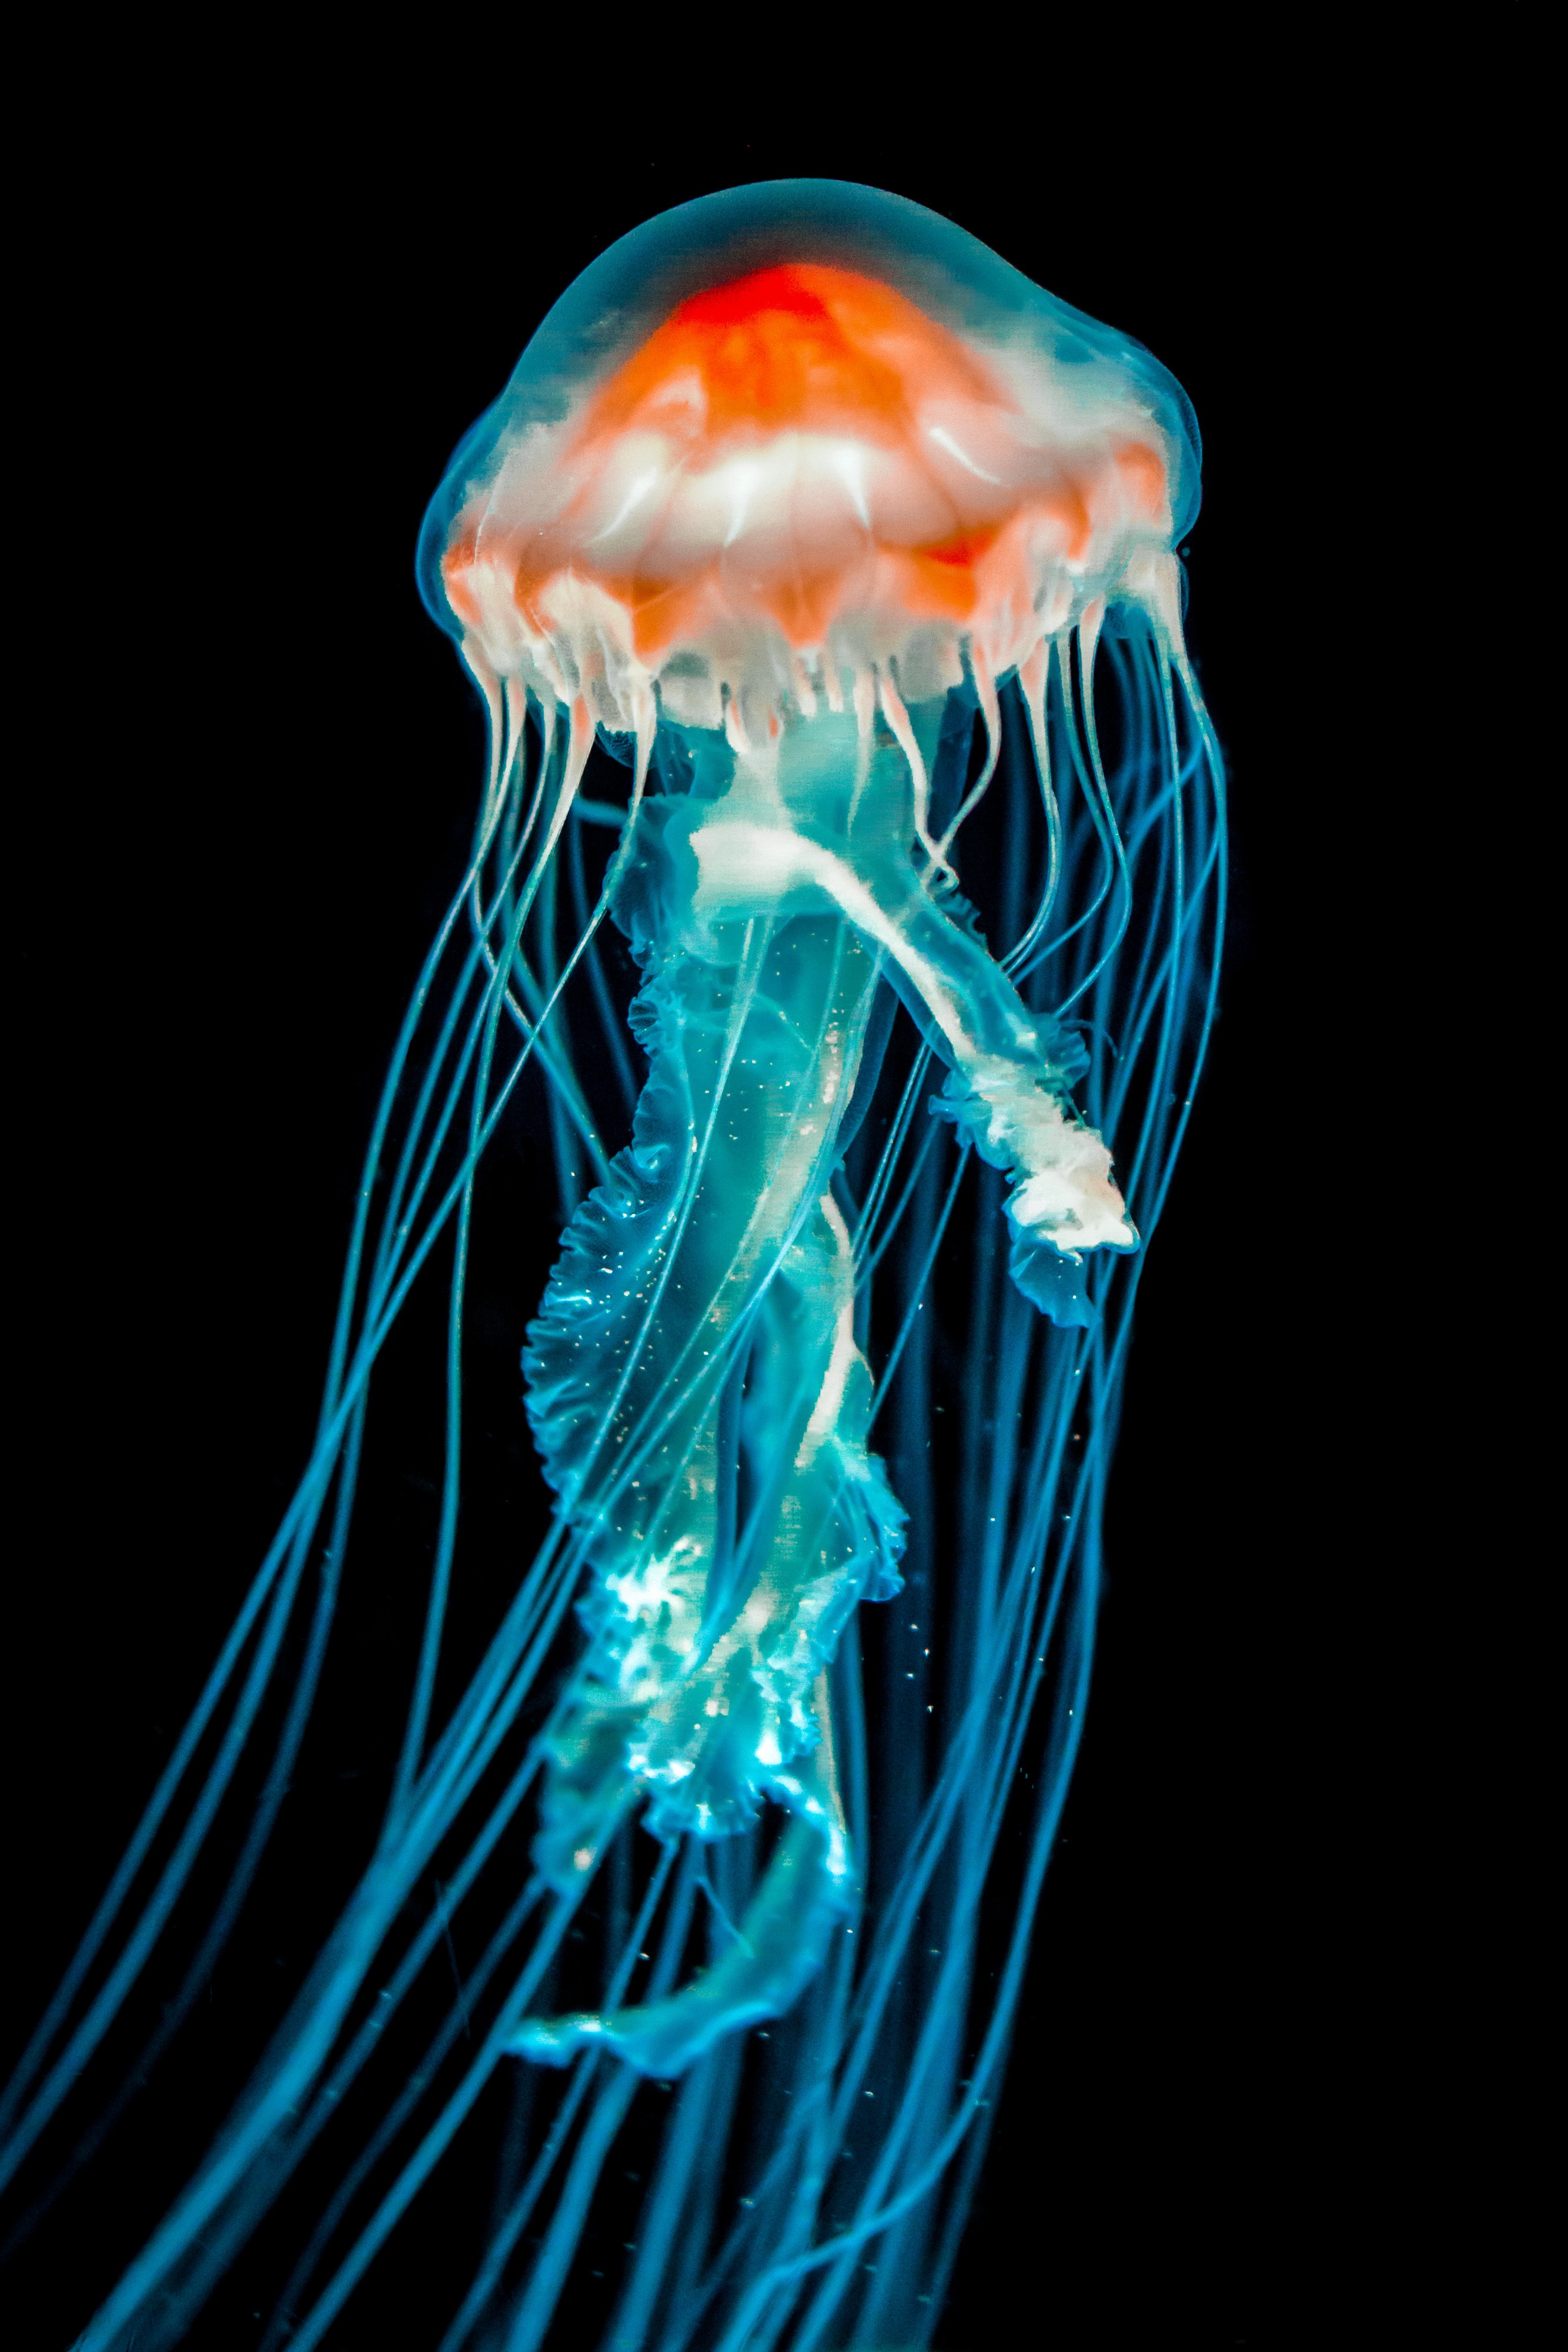 jellyfish, tentacle, dark, animals, black, underwater world UHD